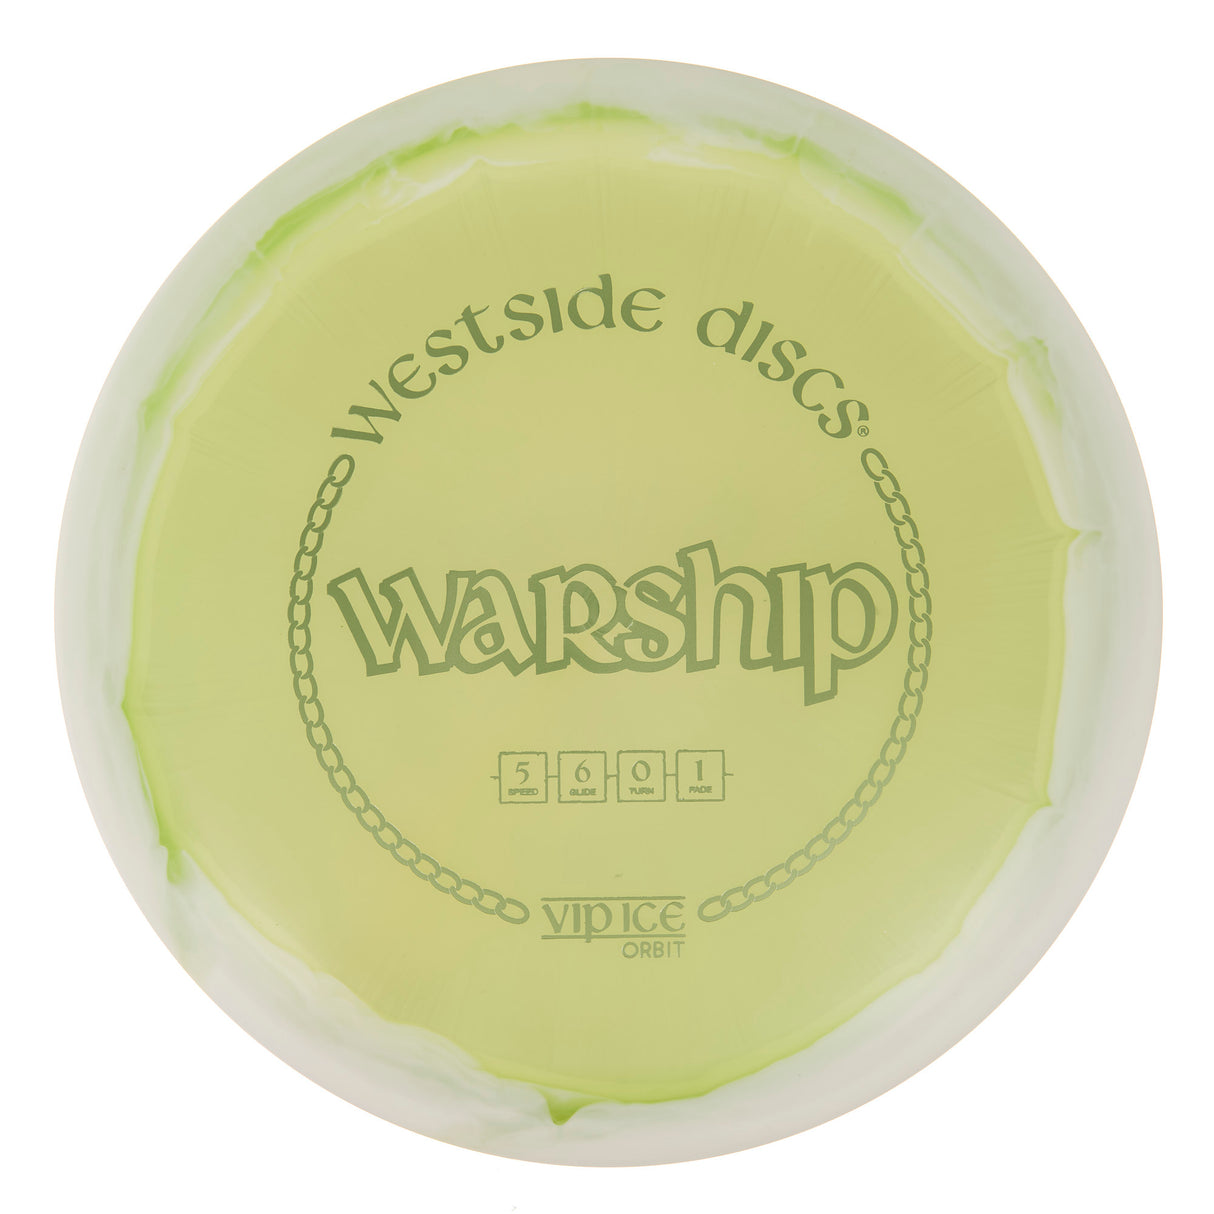 Westside Warship - VIP Ice Orbit 178g | Style 0001